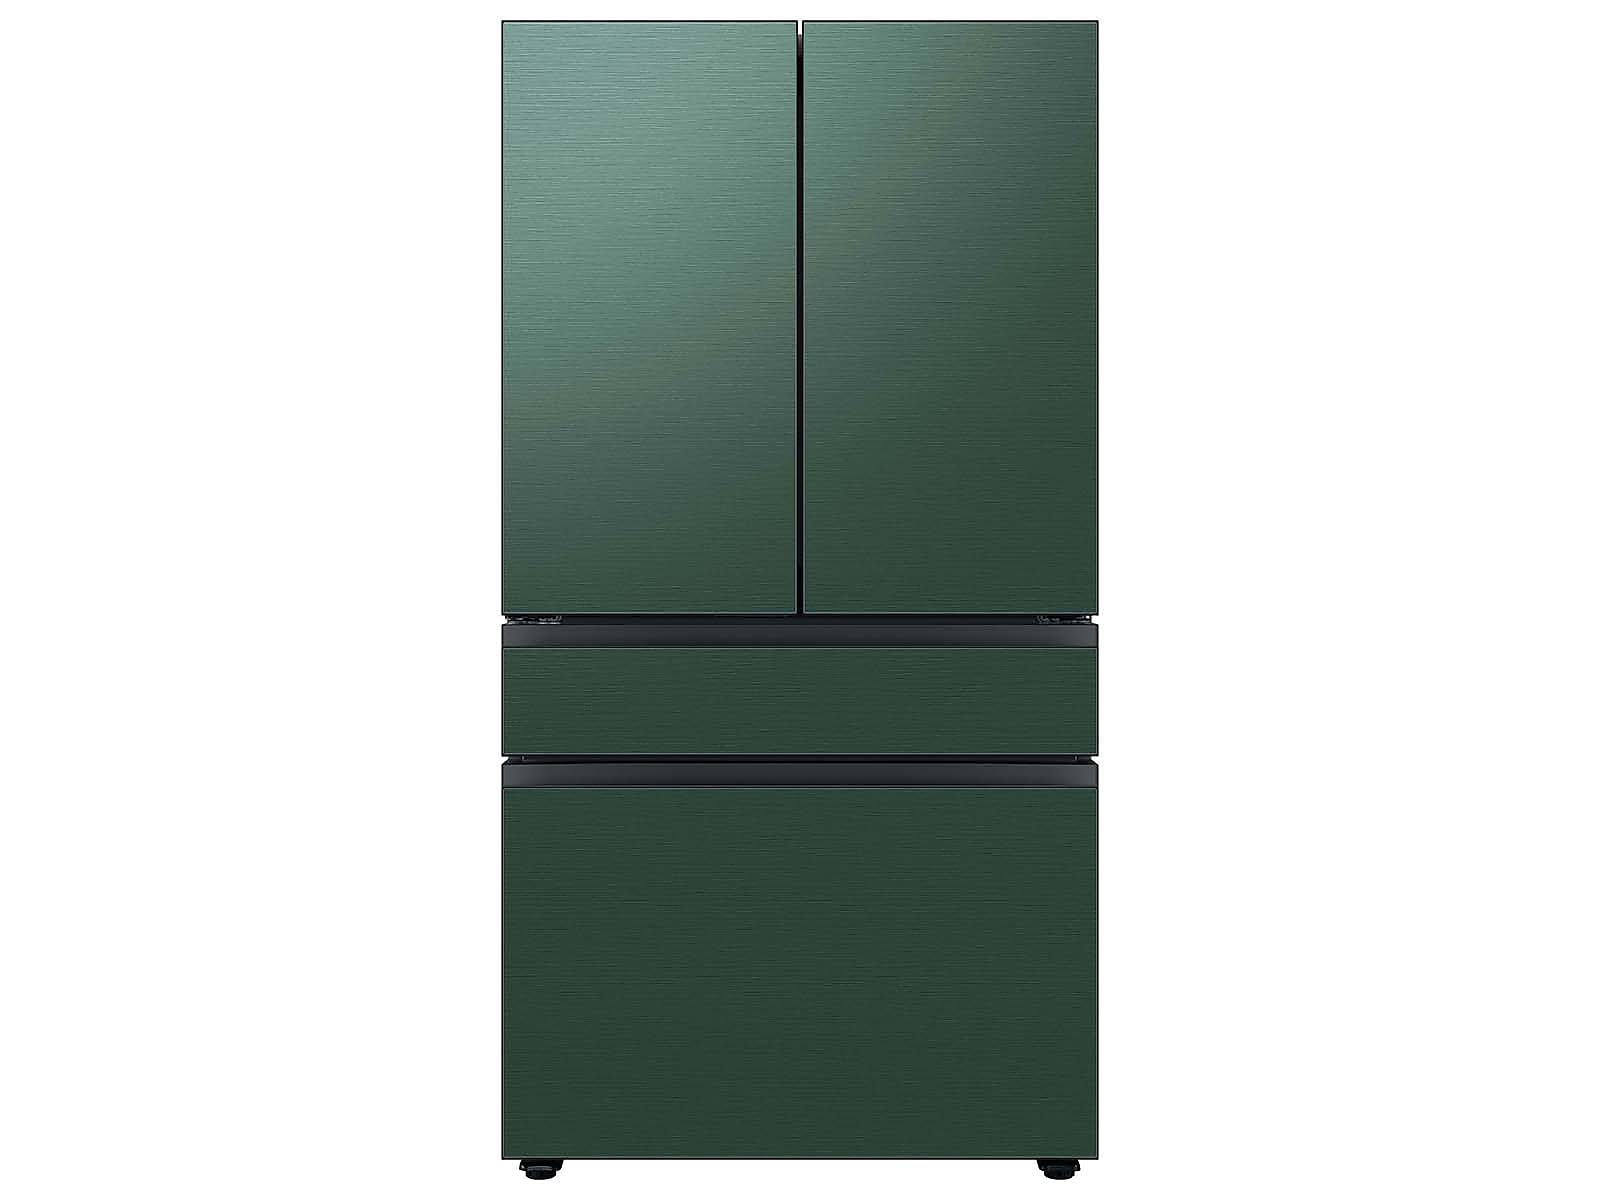 Samsung Bespoke 4-Door French Door Refrigerator in White Glass (23 cu. ft.) with AutoFill Water Pitcher and Customizable Door Panel Colors in Emerald Green Steel